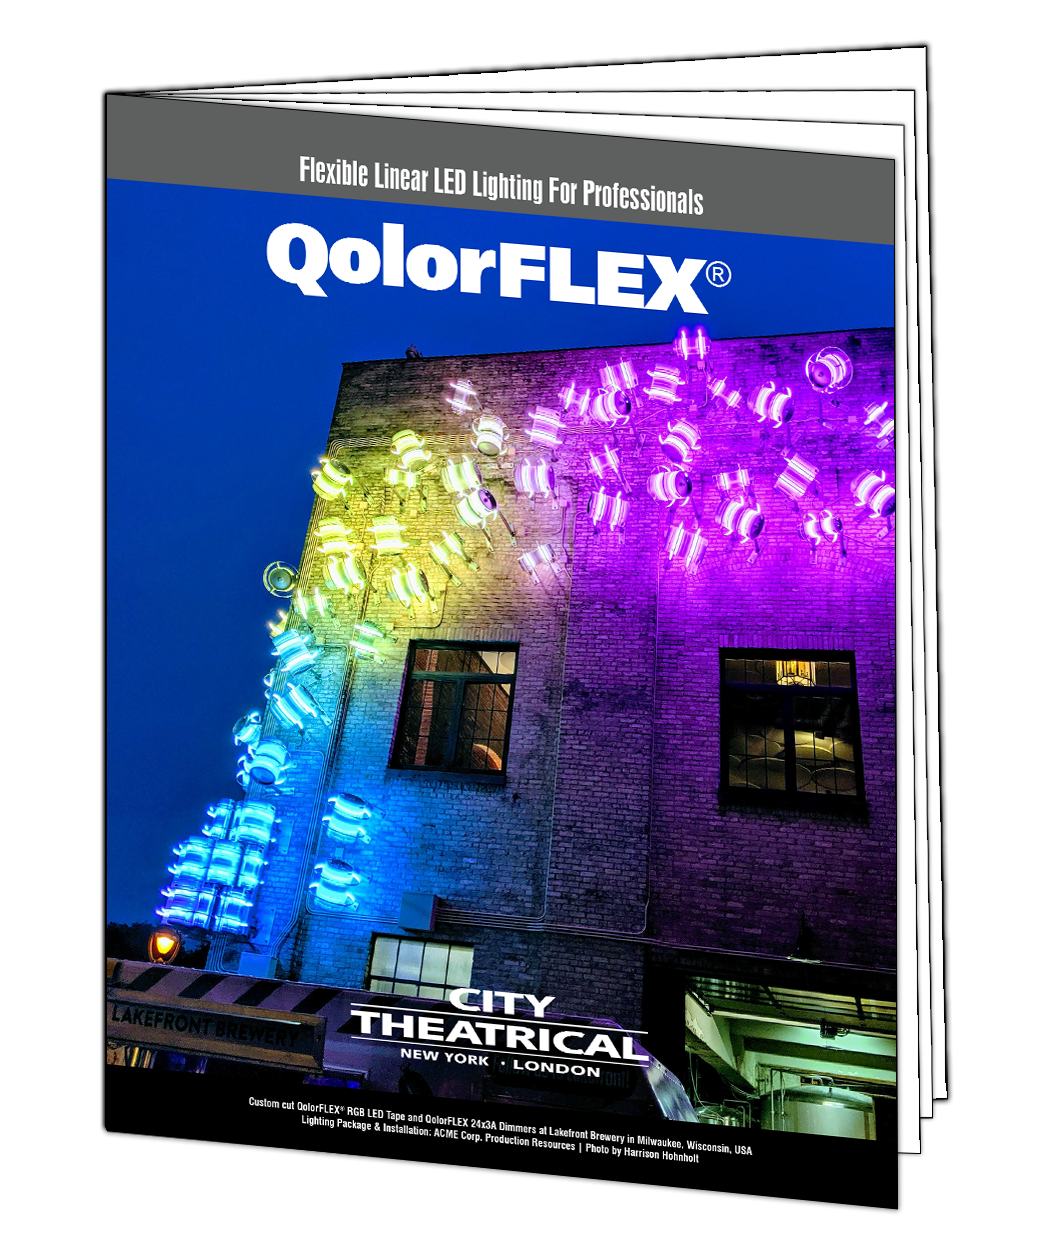 QolorFLEX Brochure by City Theatrical